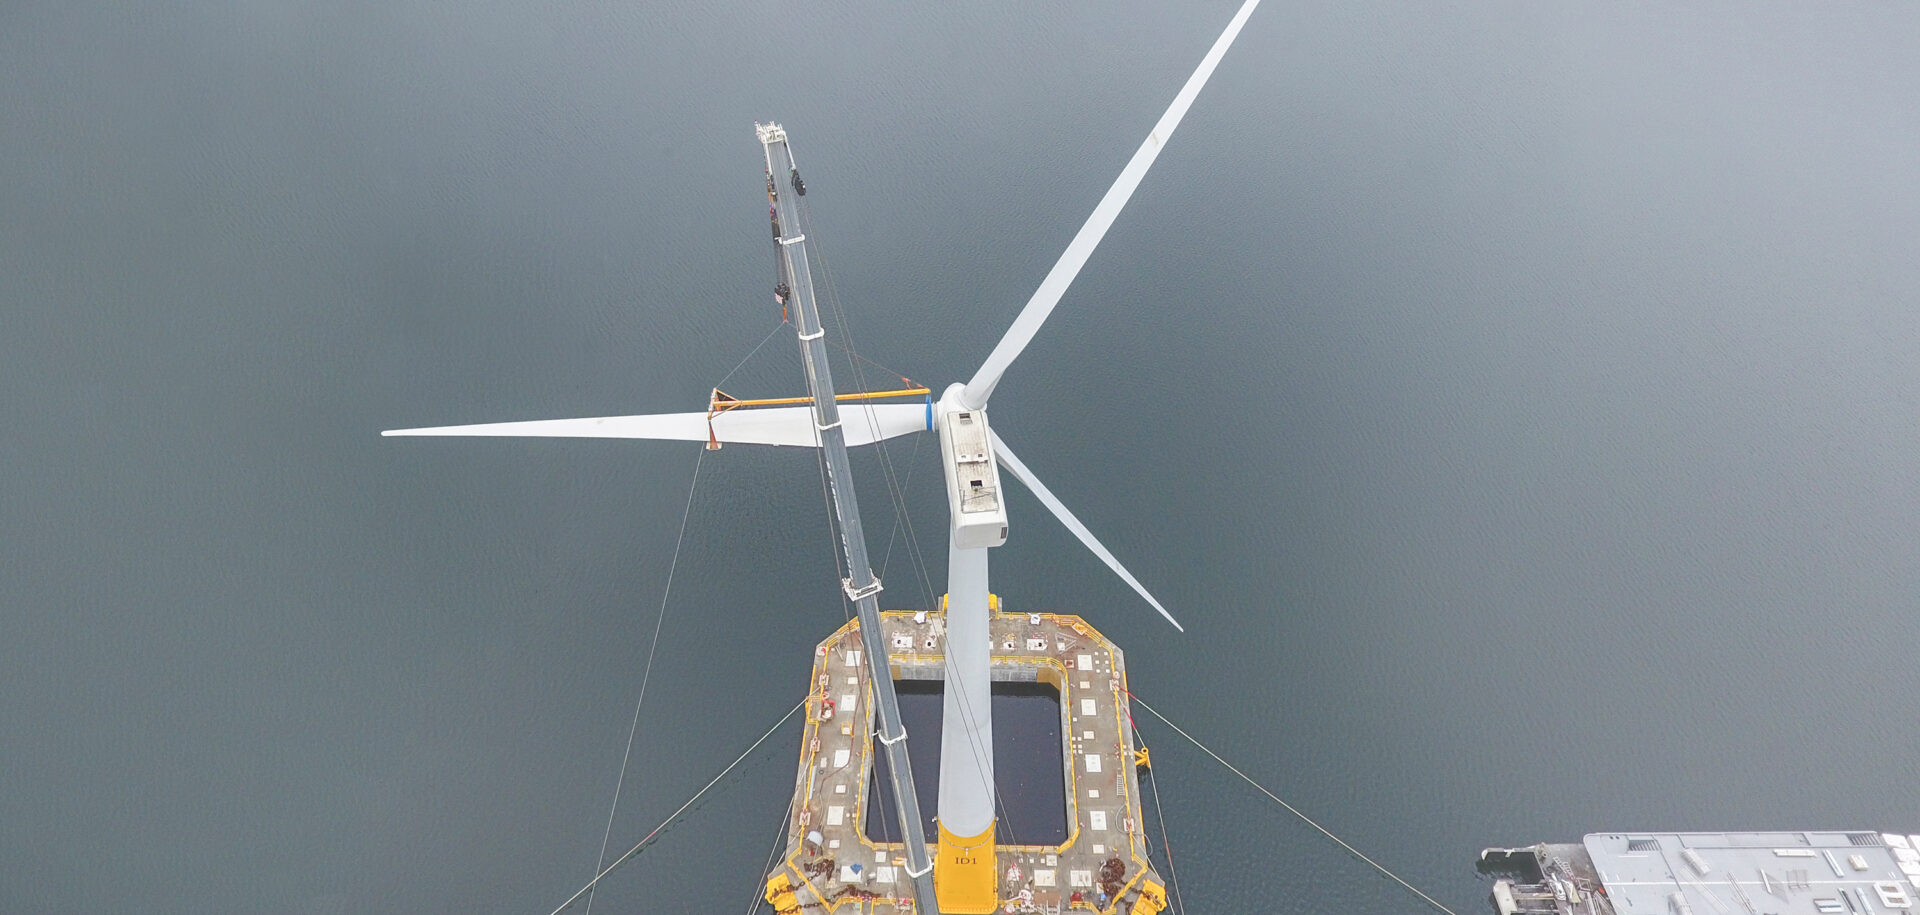 The Floatgen wind turbine